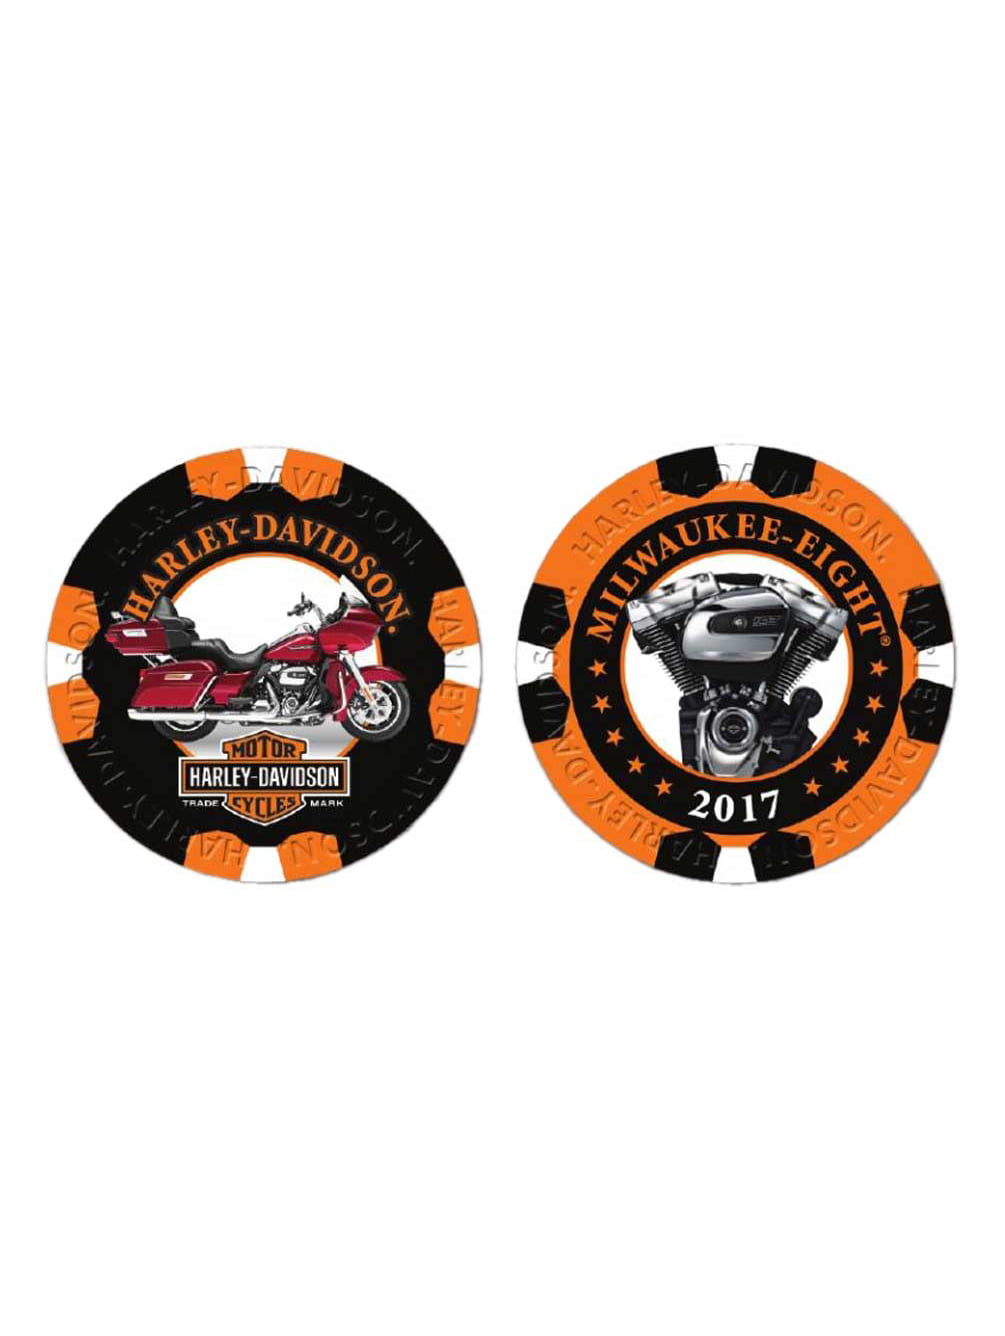 Harley Davidson Poker Chip White/Black/Orange Details about   ST CHARLES HD ~ MISSOURI ~ 